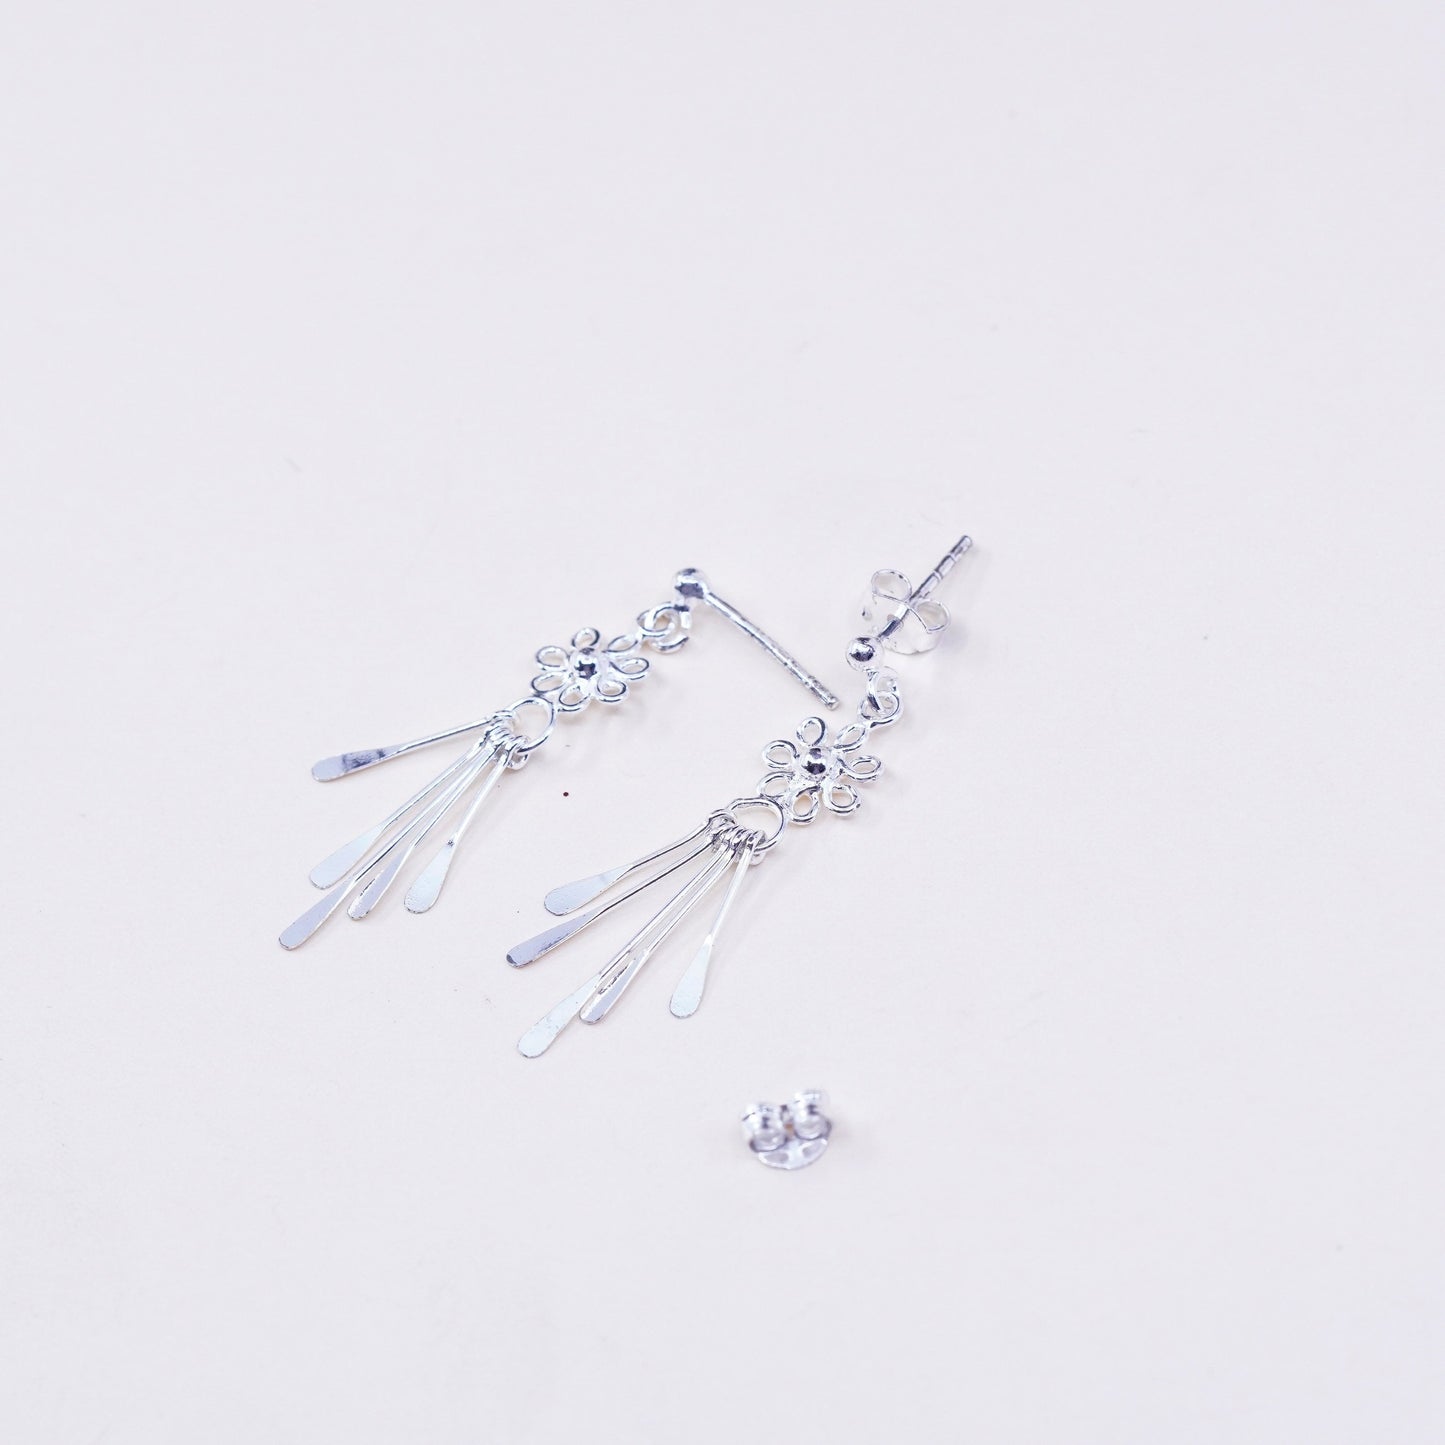 Vintage Sterling silver handmade earrings, 925 filigree circle with fringe drop